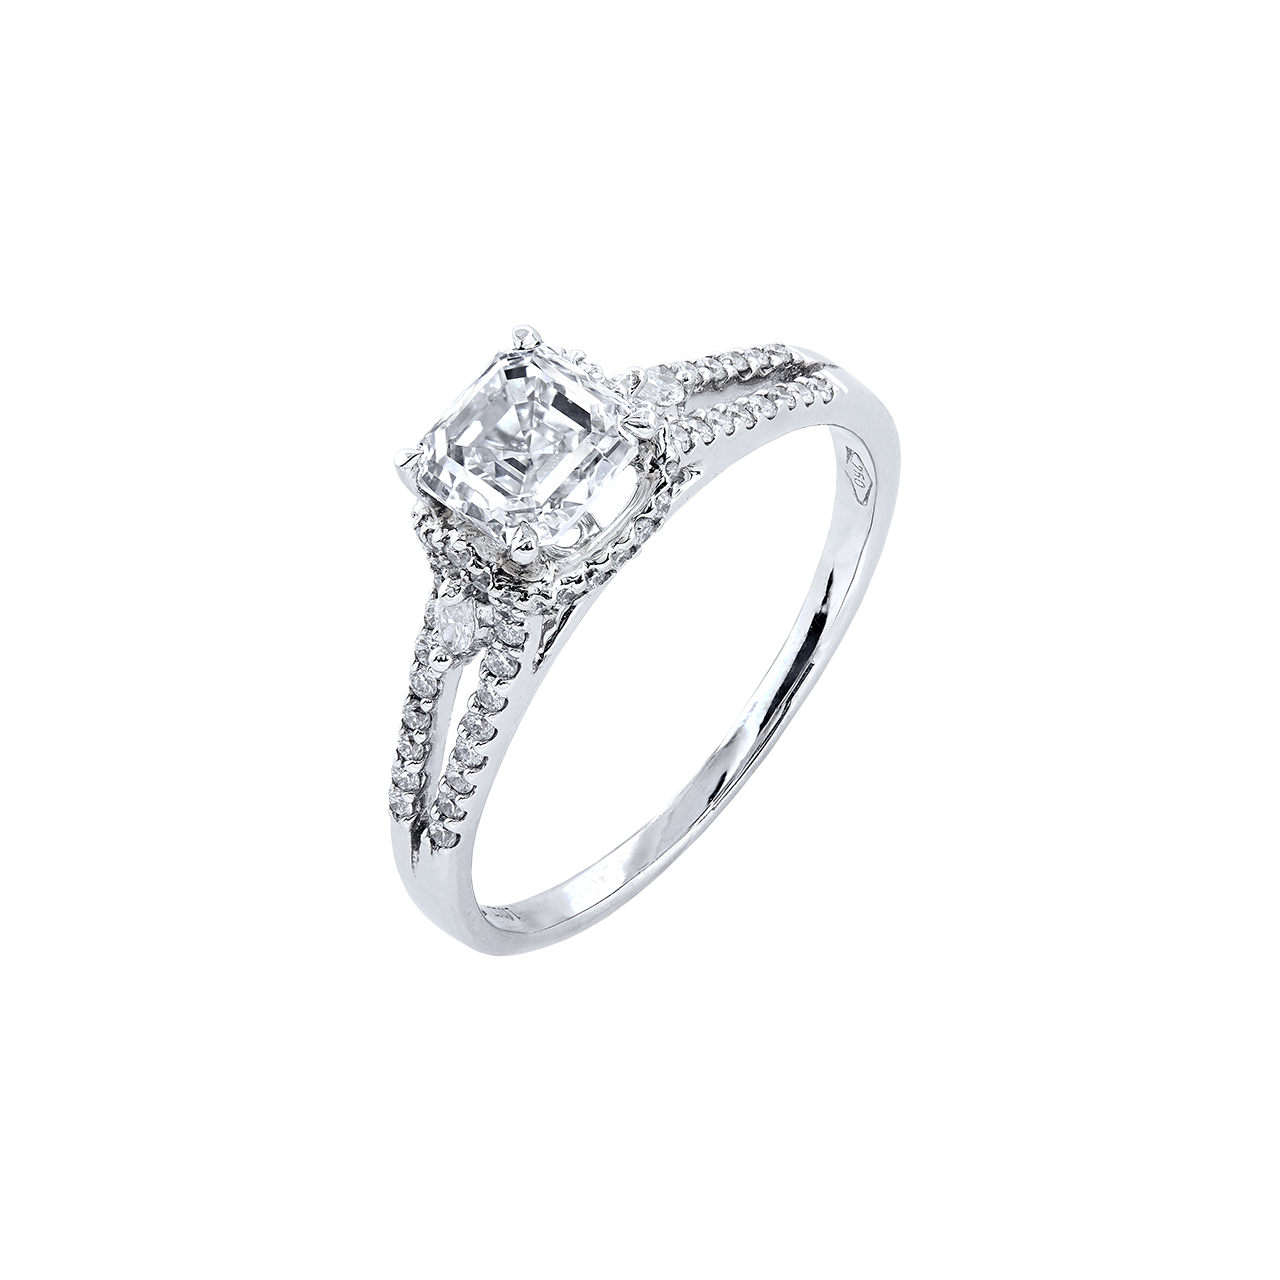 GIA 1.02 克拉 白鑽戒
F VVS2 Diamond Ring